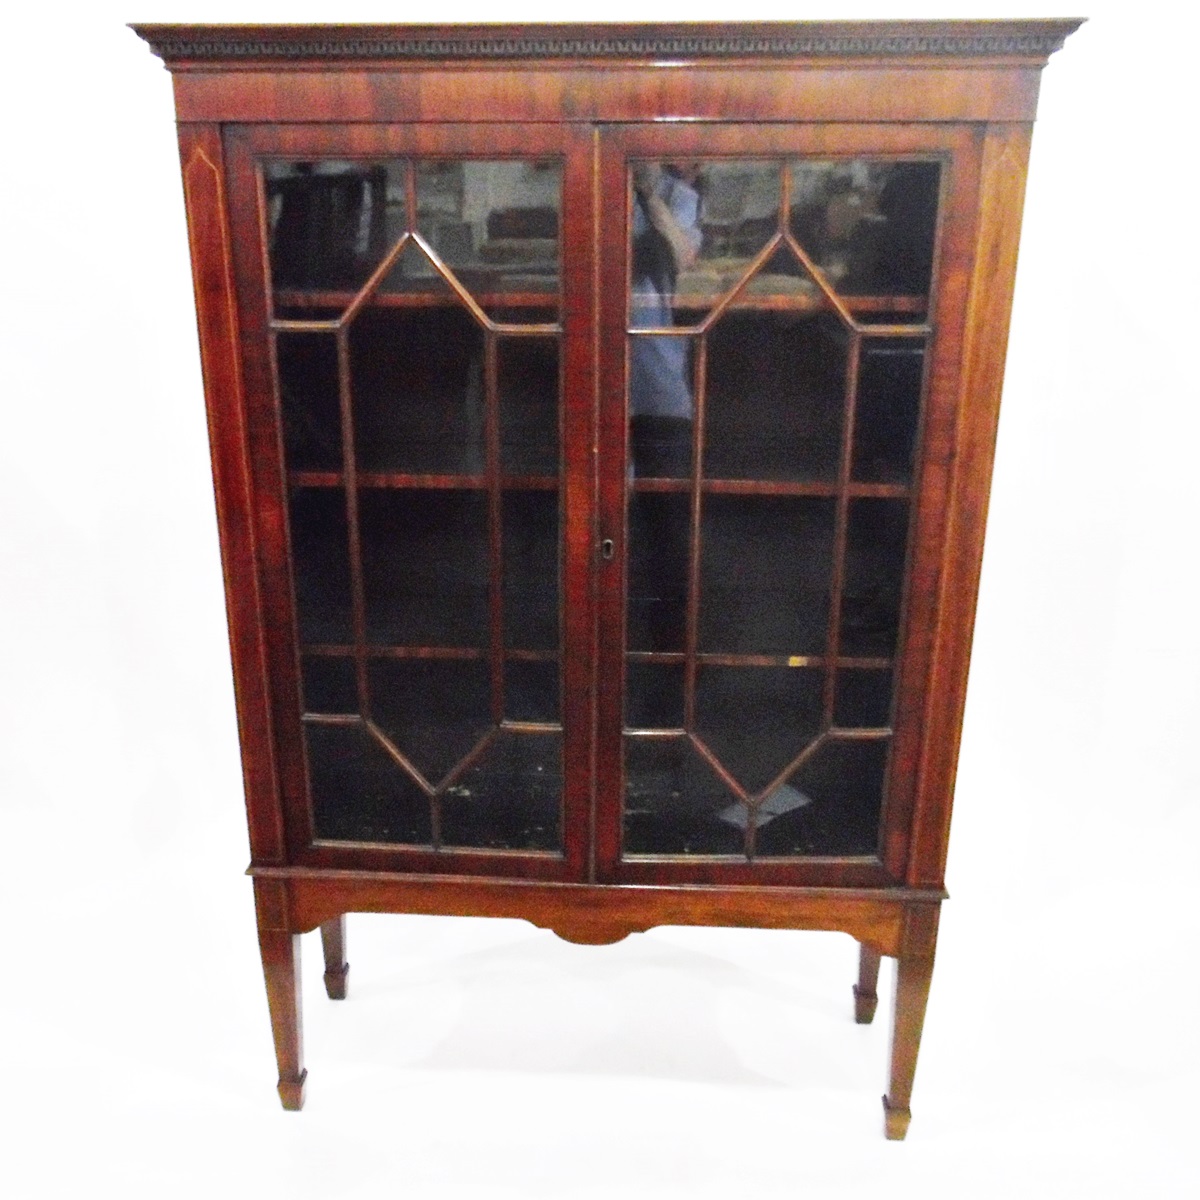 Edwardian mahogany glazed bookcase with Greek key pattern corners,